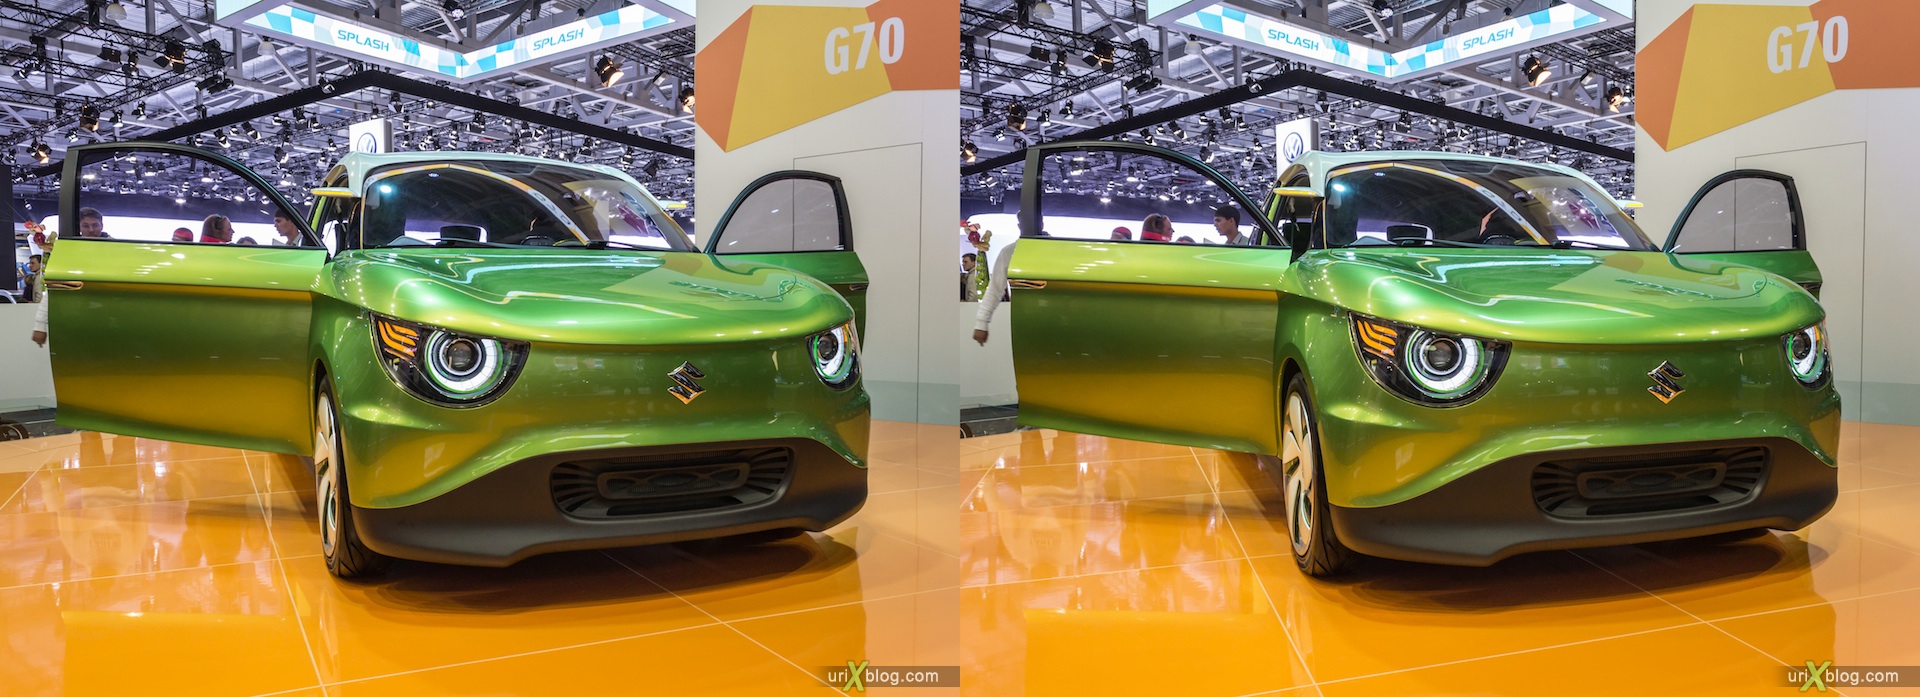 2012, Suzuki G70, Moscow International Automobile Salon, auto show, 3D, stereo pair, cross-eyed, crossview